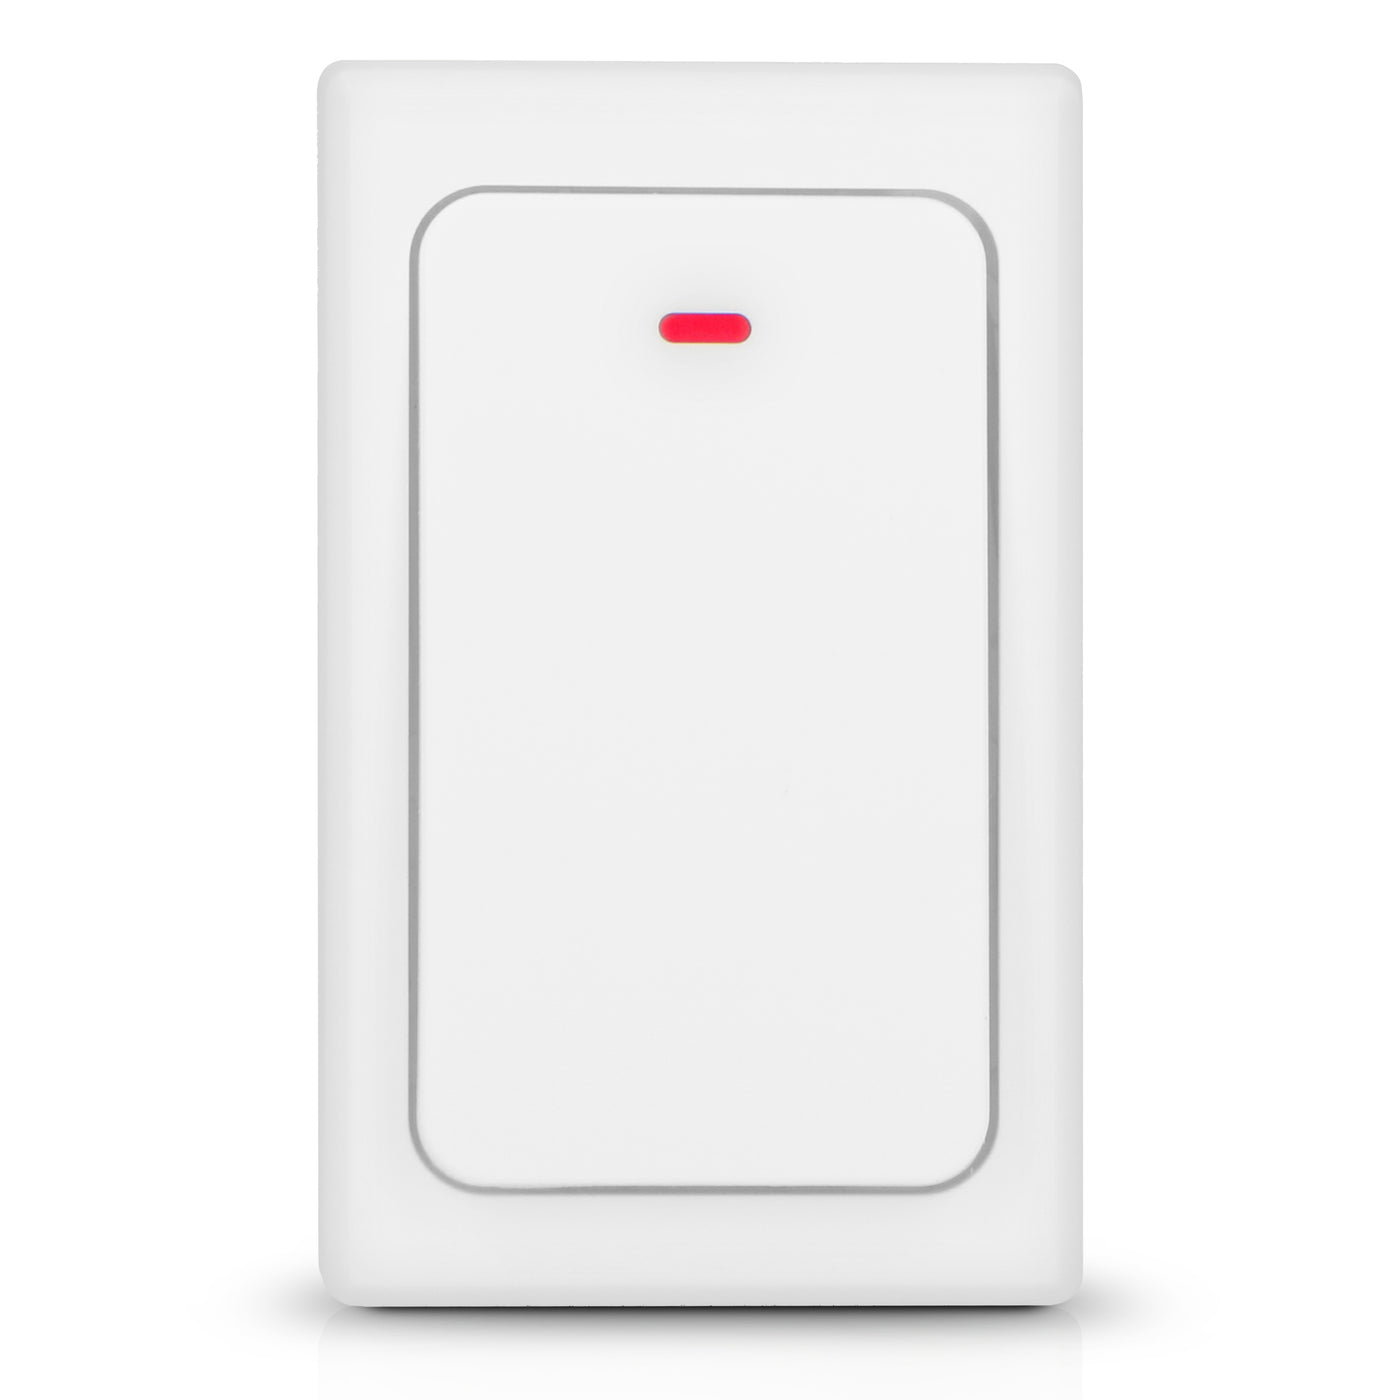 Alecto ADB30WT - Self-powered wireless doorbell, white